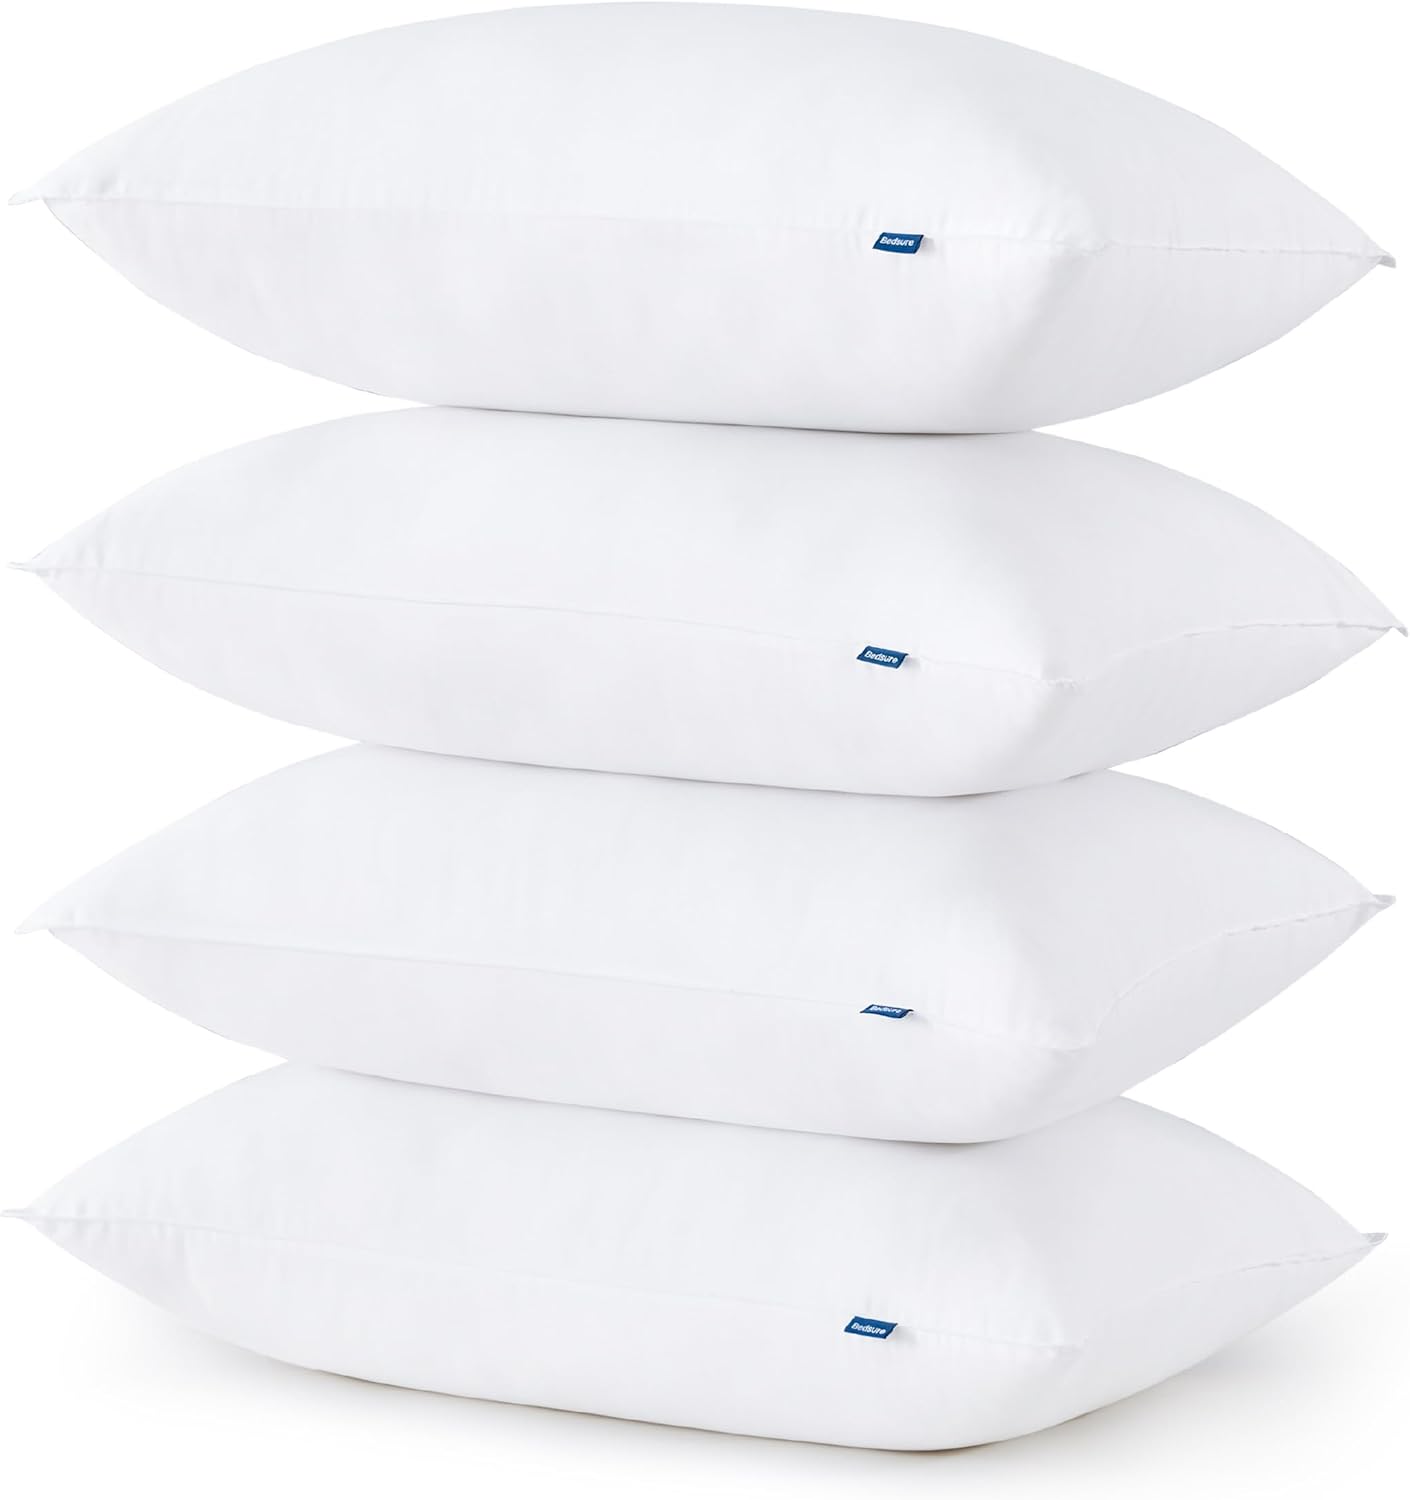 Bedsure Soft Pillows